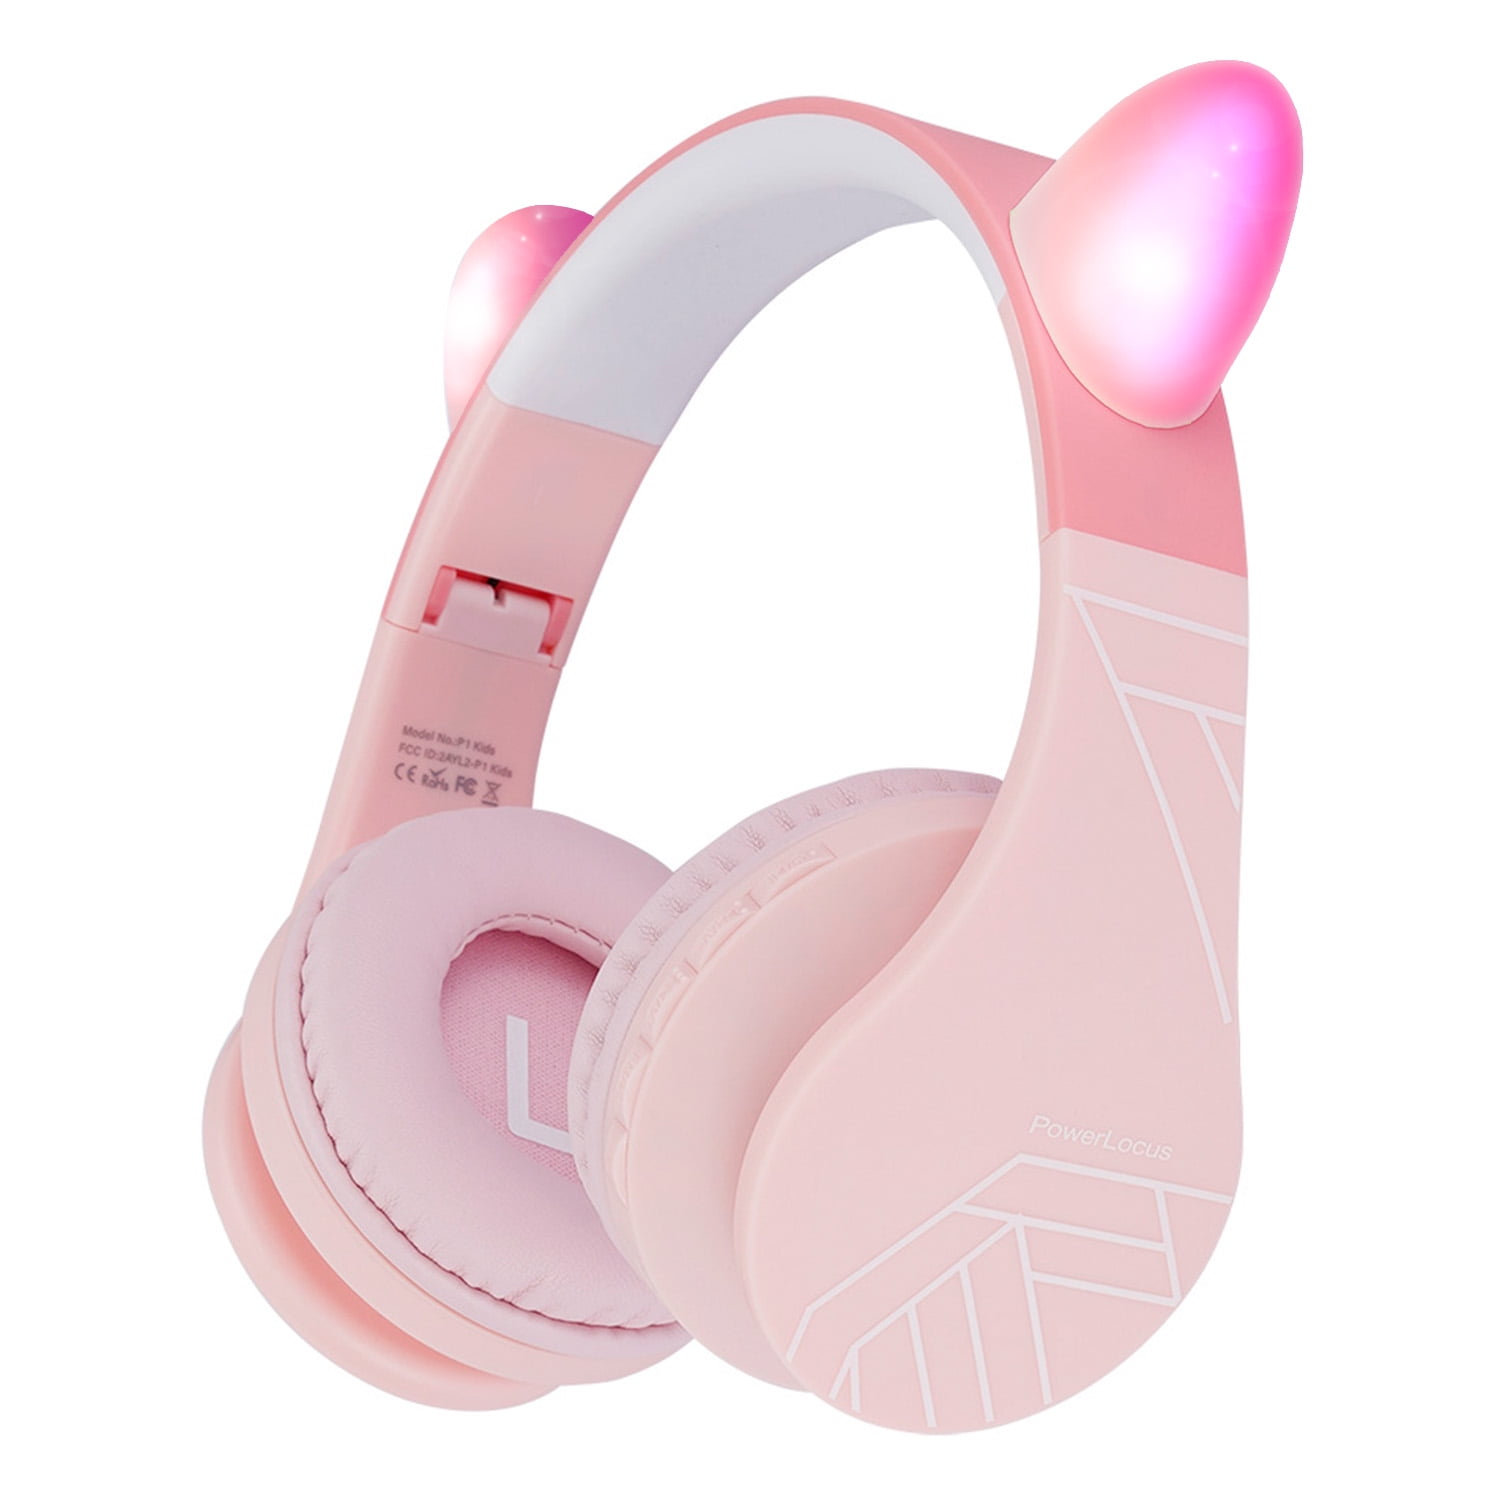 Noise PowerLocus Wireless Headphones Over-Ear Wireless Bluetooth Headphones 